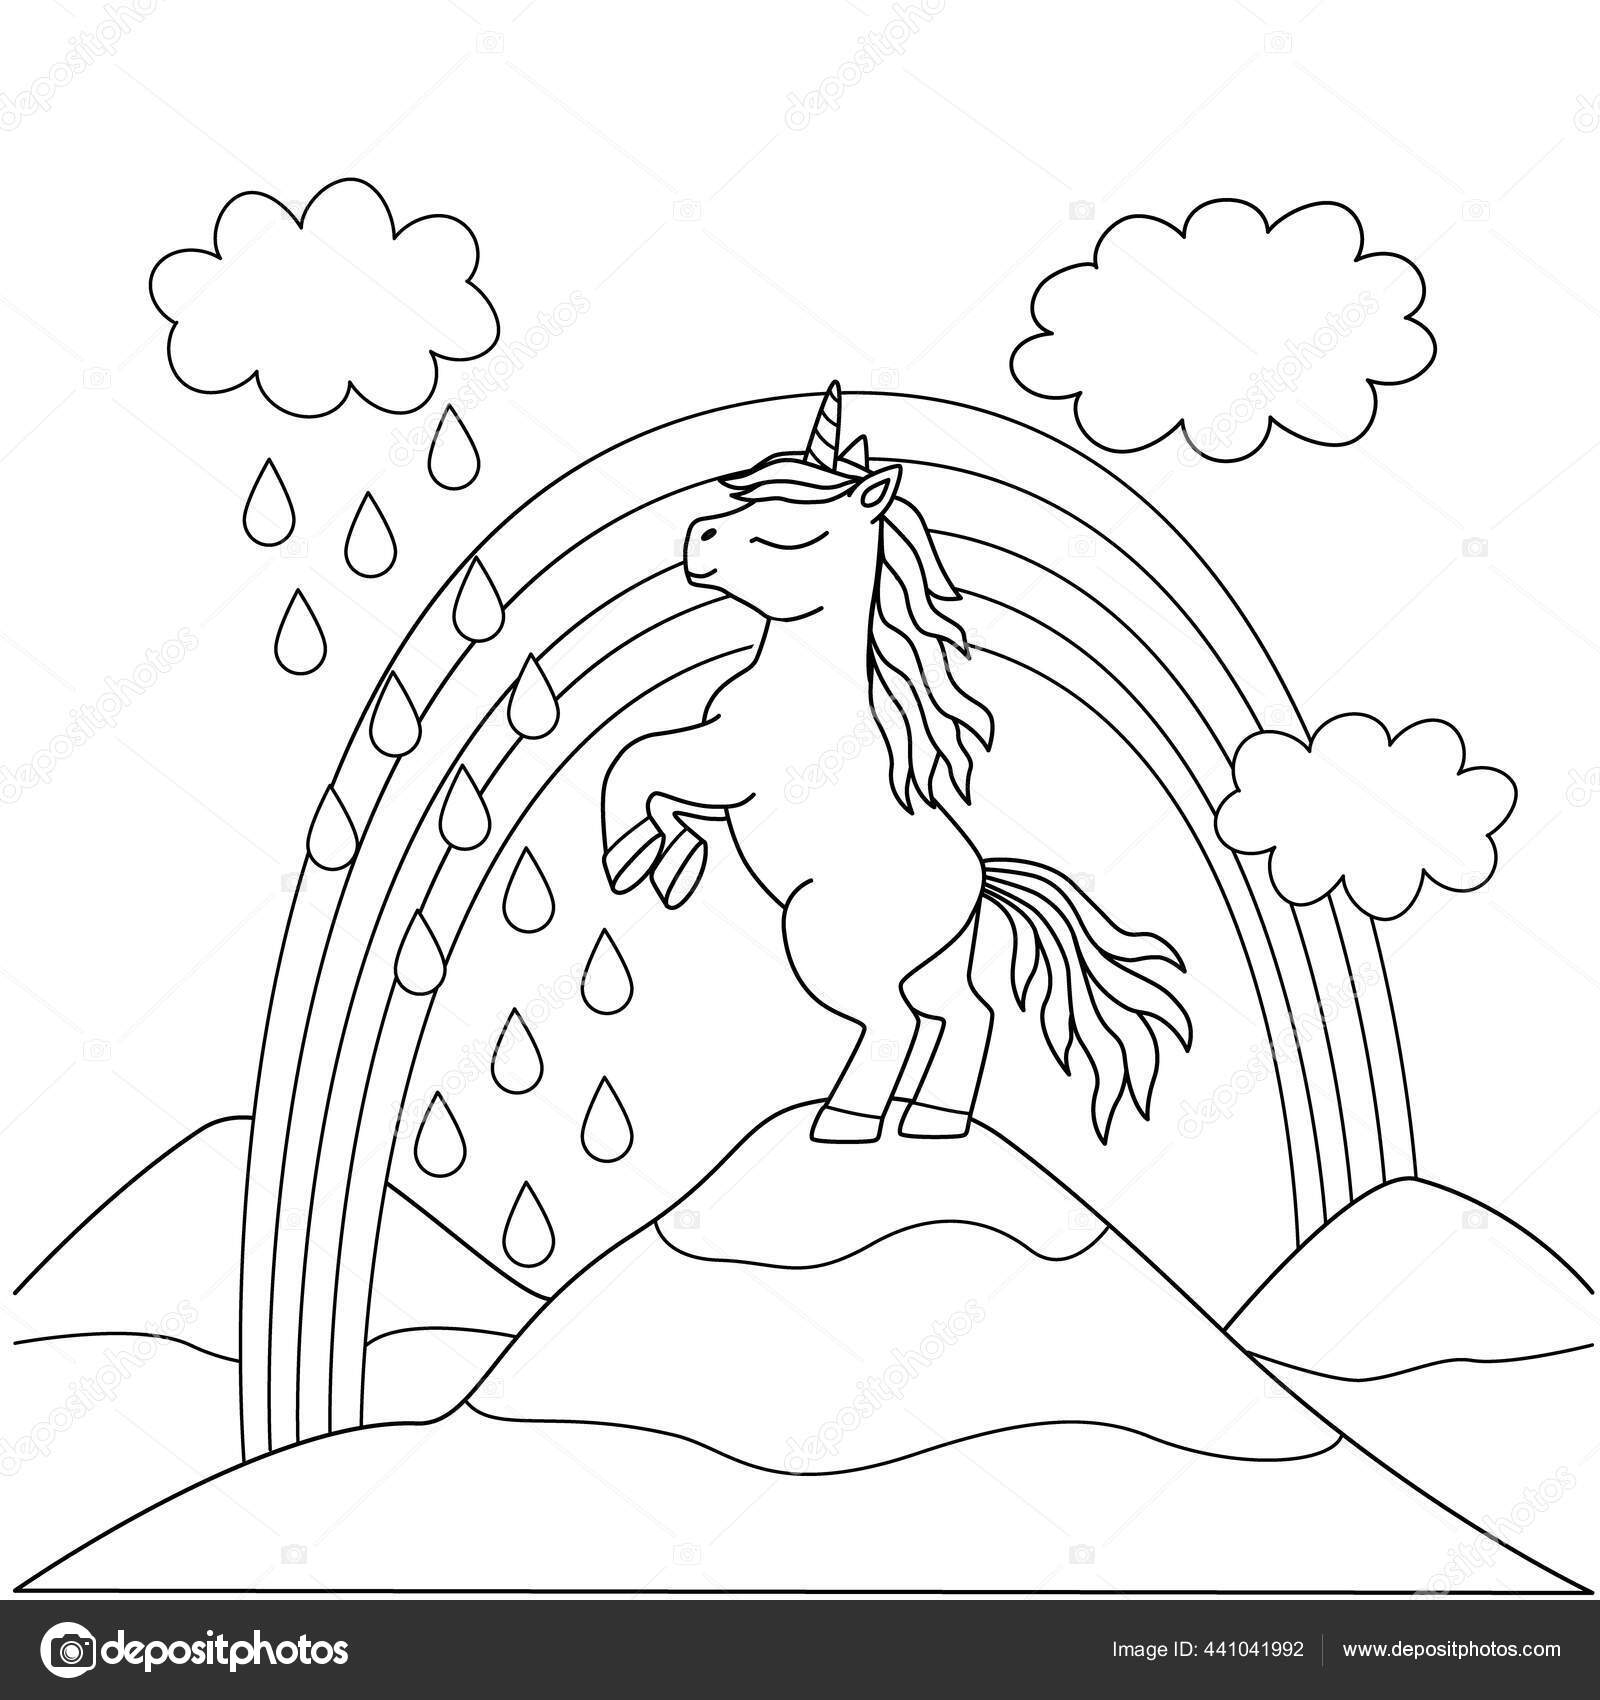 Buku Mewarnai Untuk Anak Anak Dengan Unicorn Yang Indah Di Atas Gunung Kuda Poni Yang Lucu Dengan Kaki Belakangnya